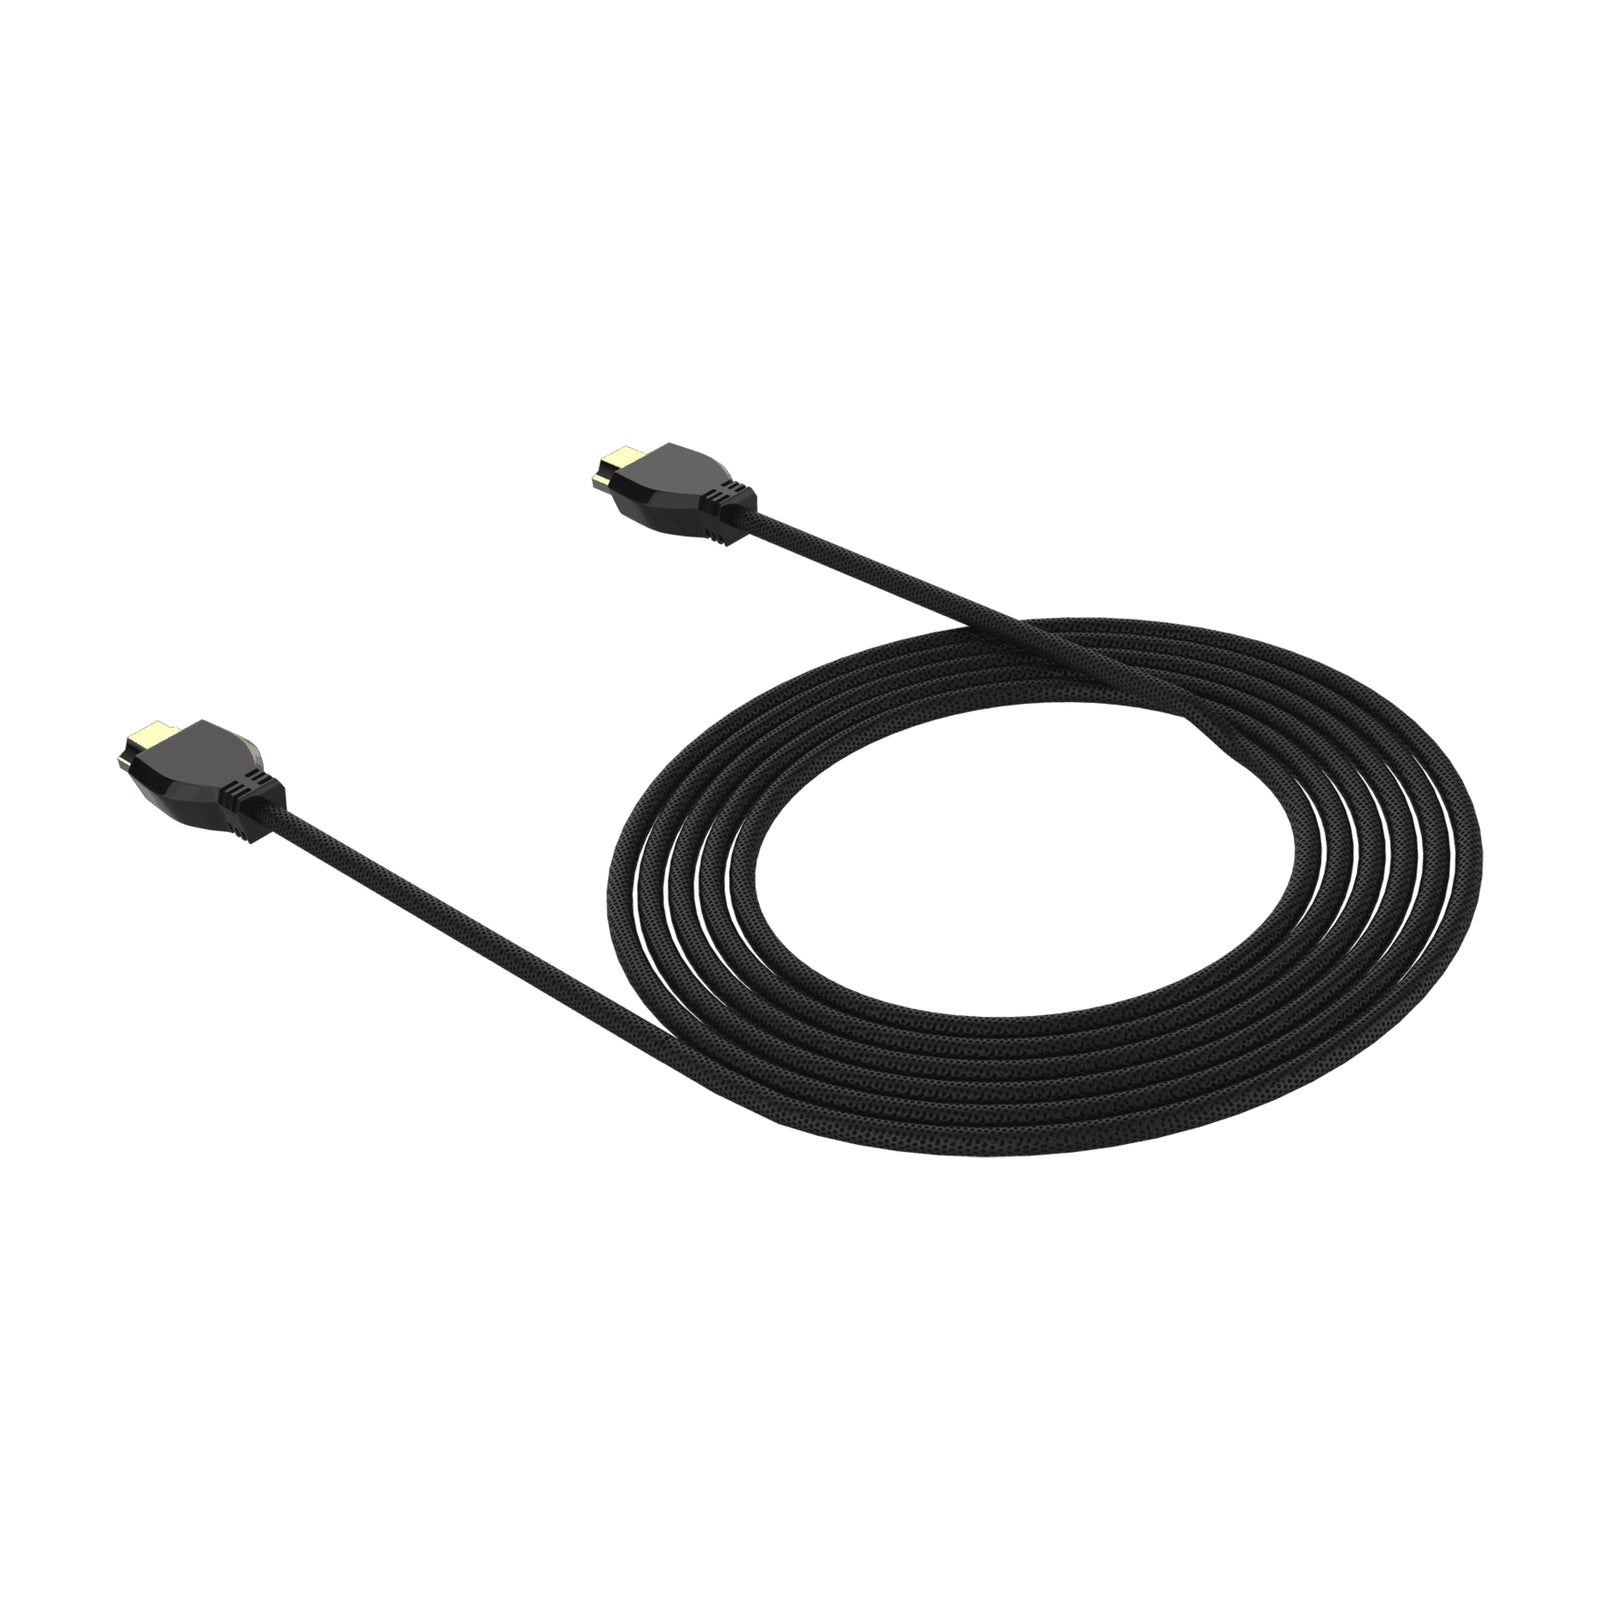 Gorilla Gaming 8K HDMI 2.1 Cable (1.8m) 48Gbps 8K@60Hz 4K@120Hz - Xbox Series X